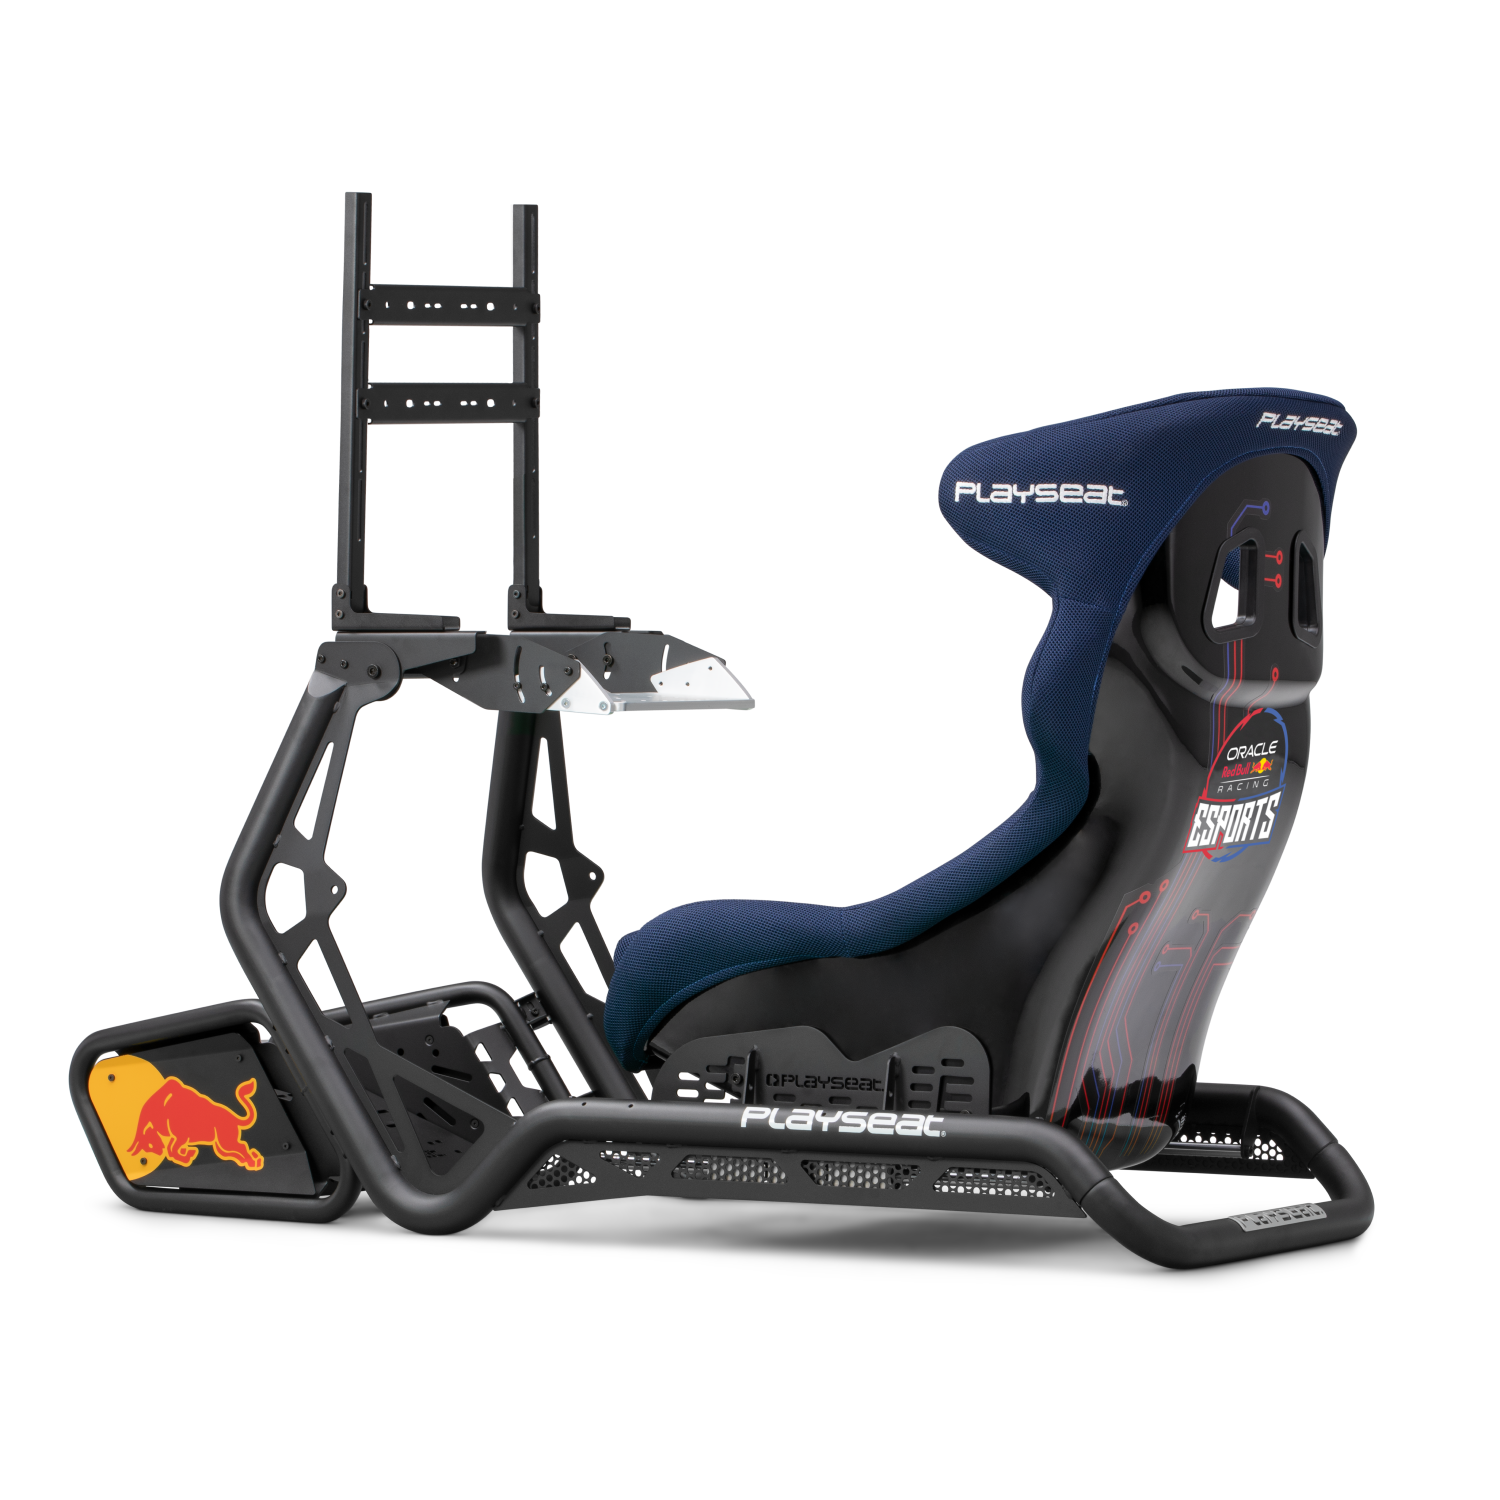 Playseat Evolution Pro-Red Bull Racing Esports